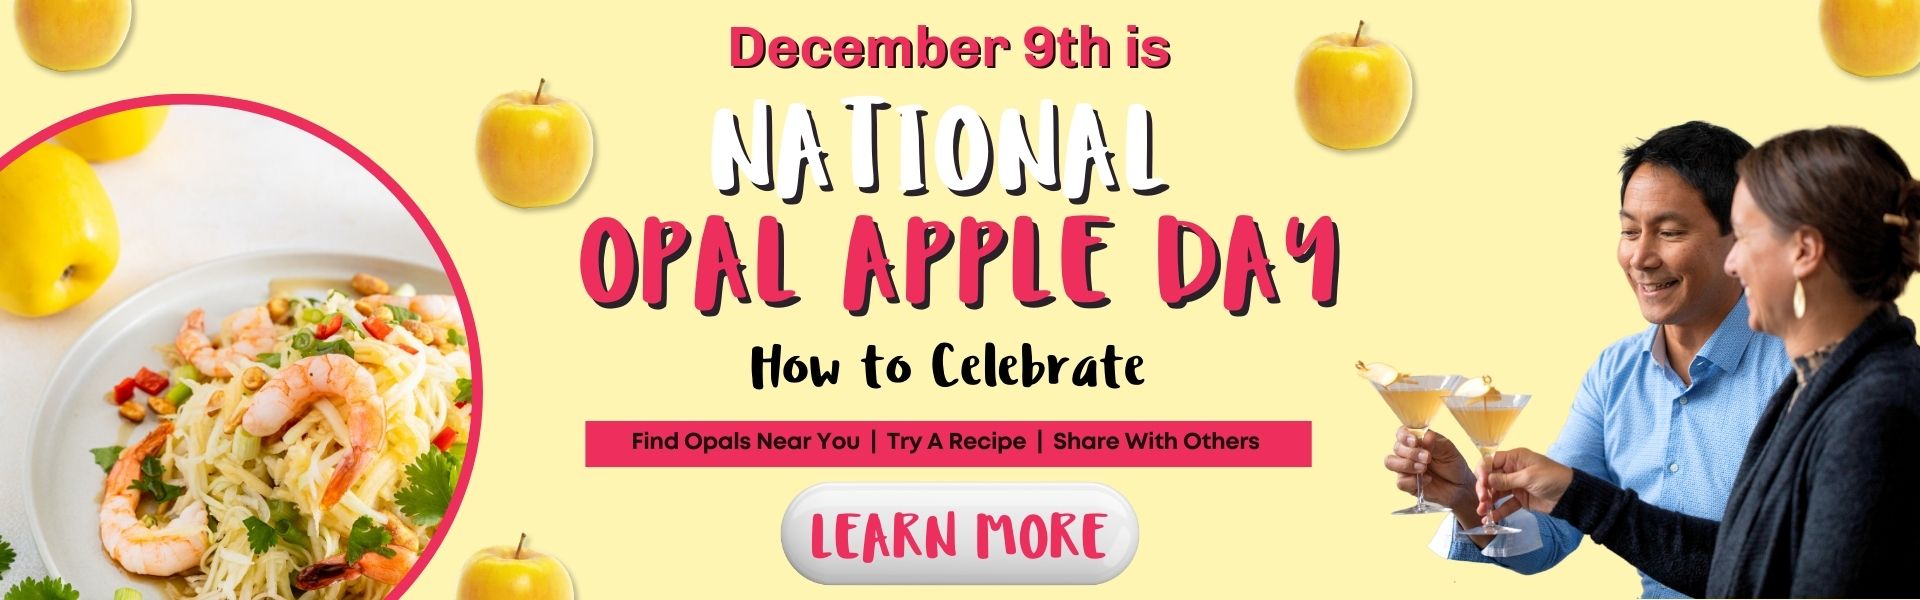 https://www.opalapples.com/media/27133/opal-apple-nat-apple-day.jpg